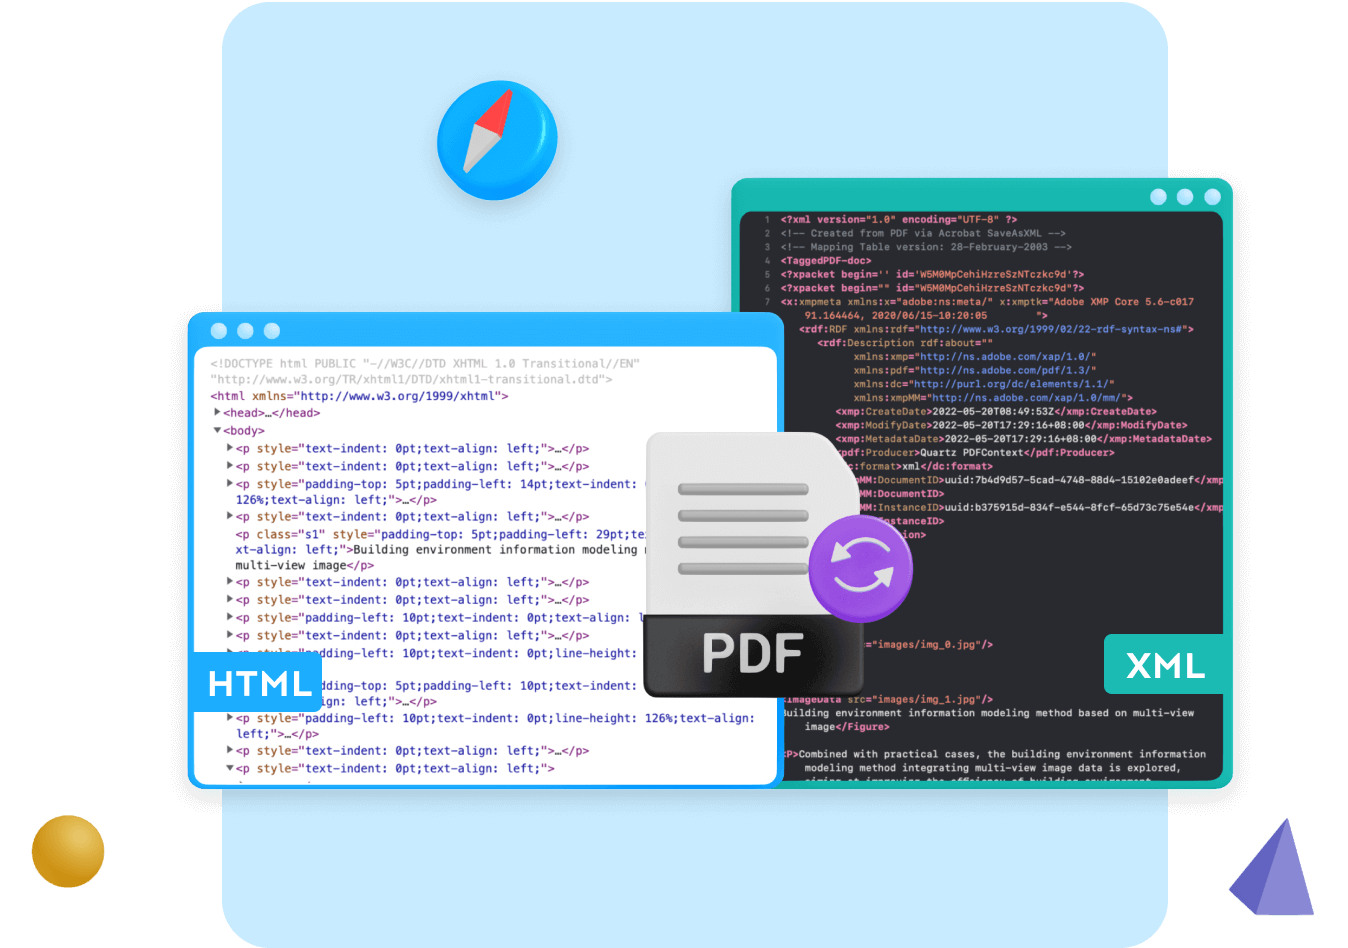 convert pdf to html